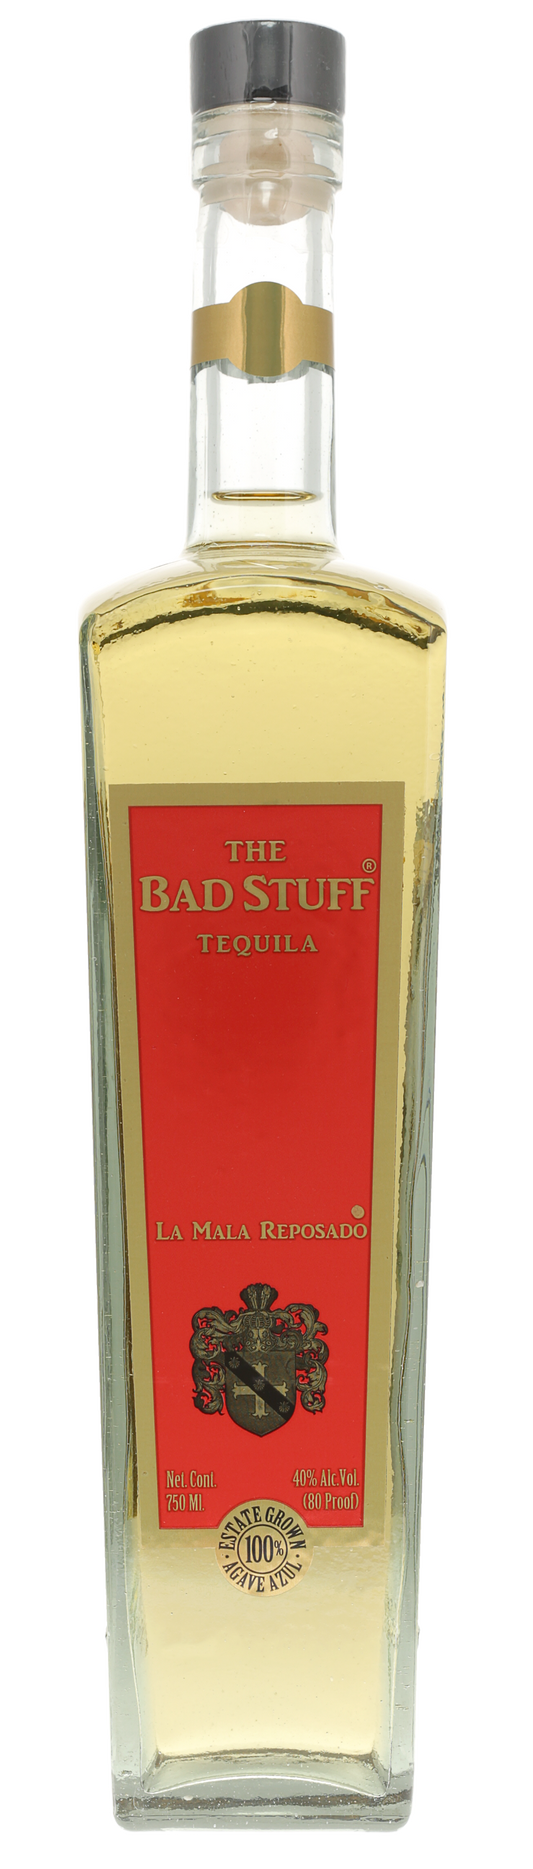 The Bad Stuff La Mala Reposado Tequila